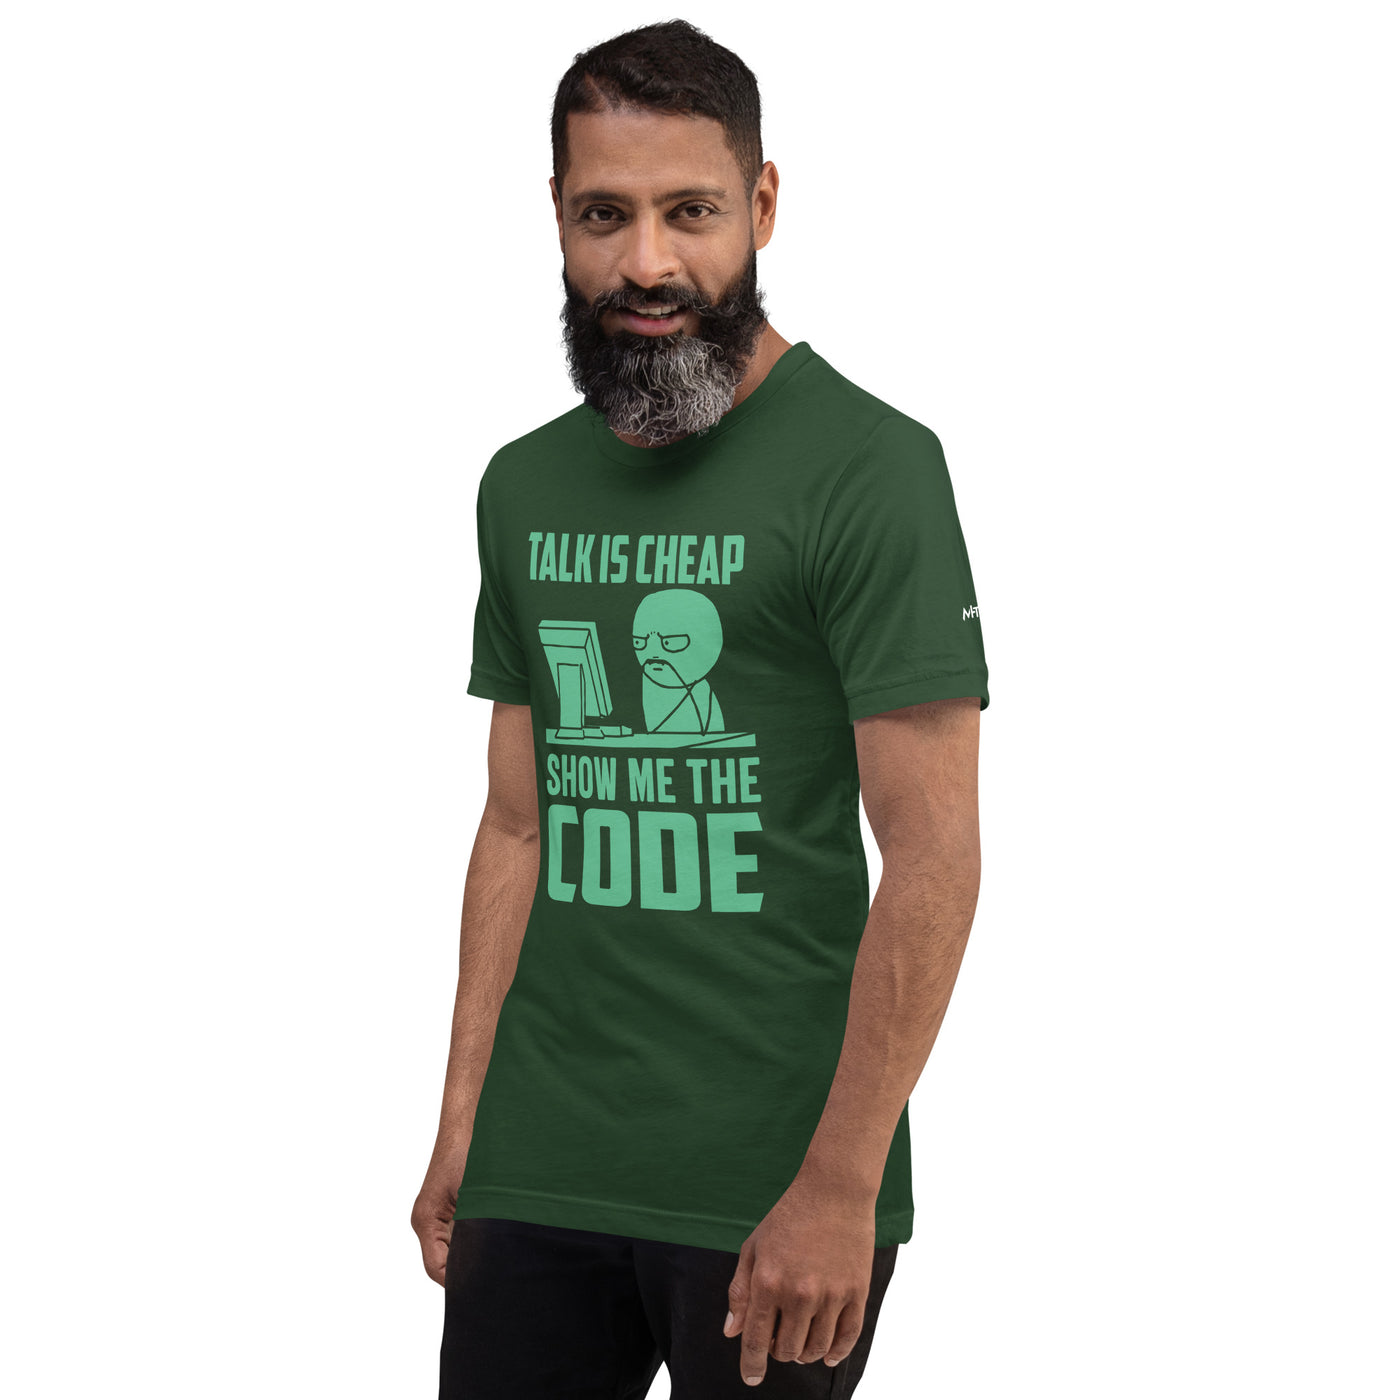 Talk is Cheap, Show me the Code Unisex t-shirt